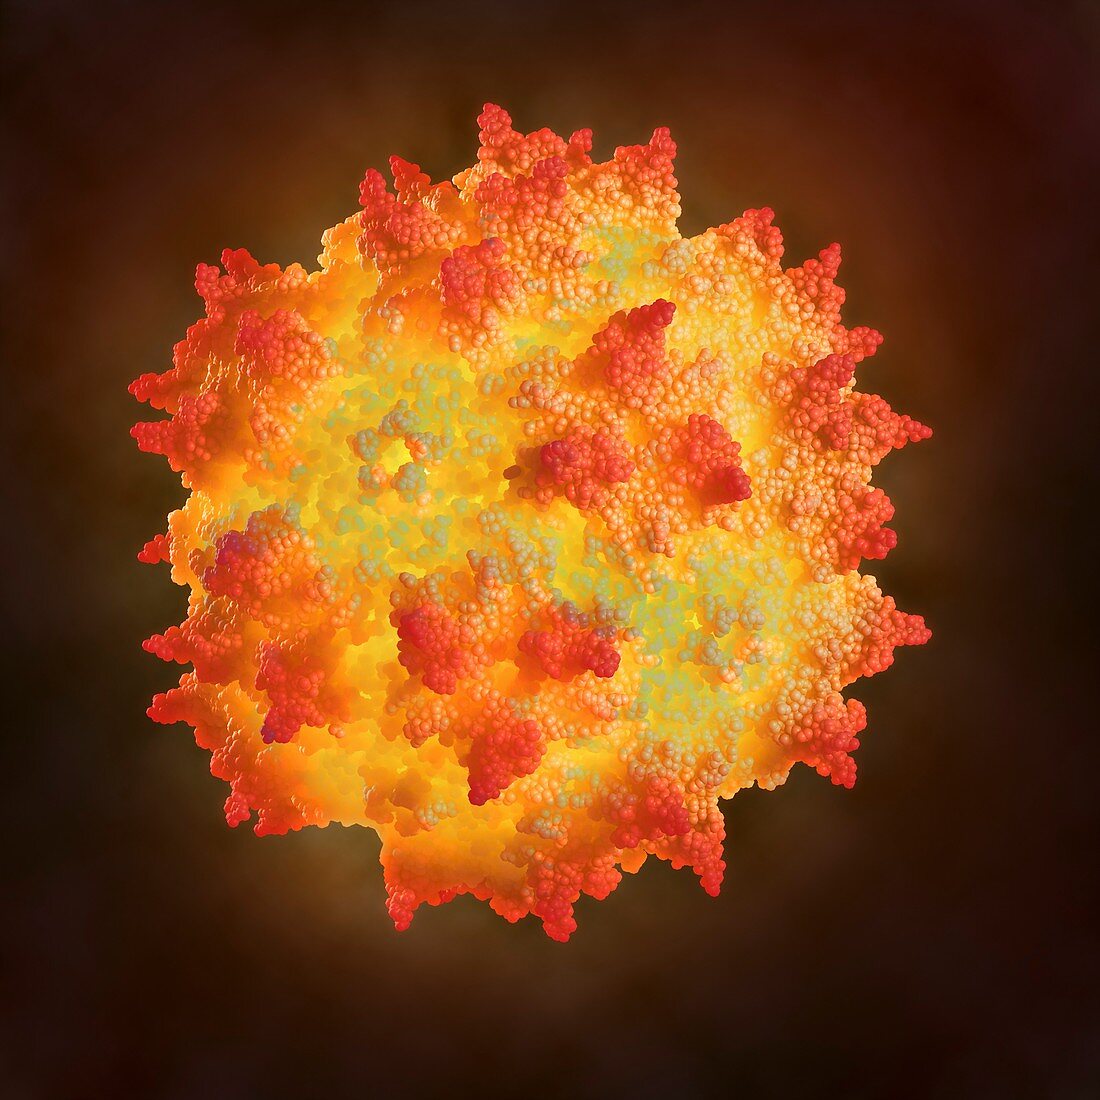 Virus Particles, artwork